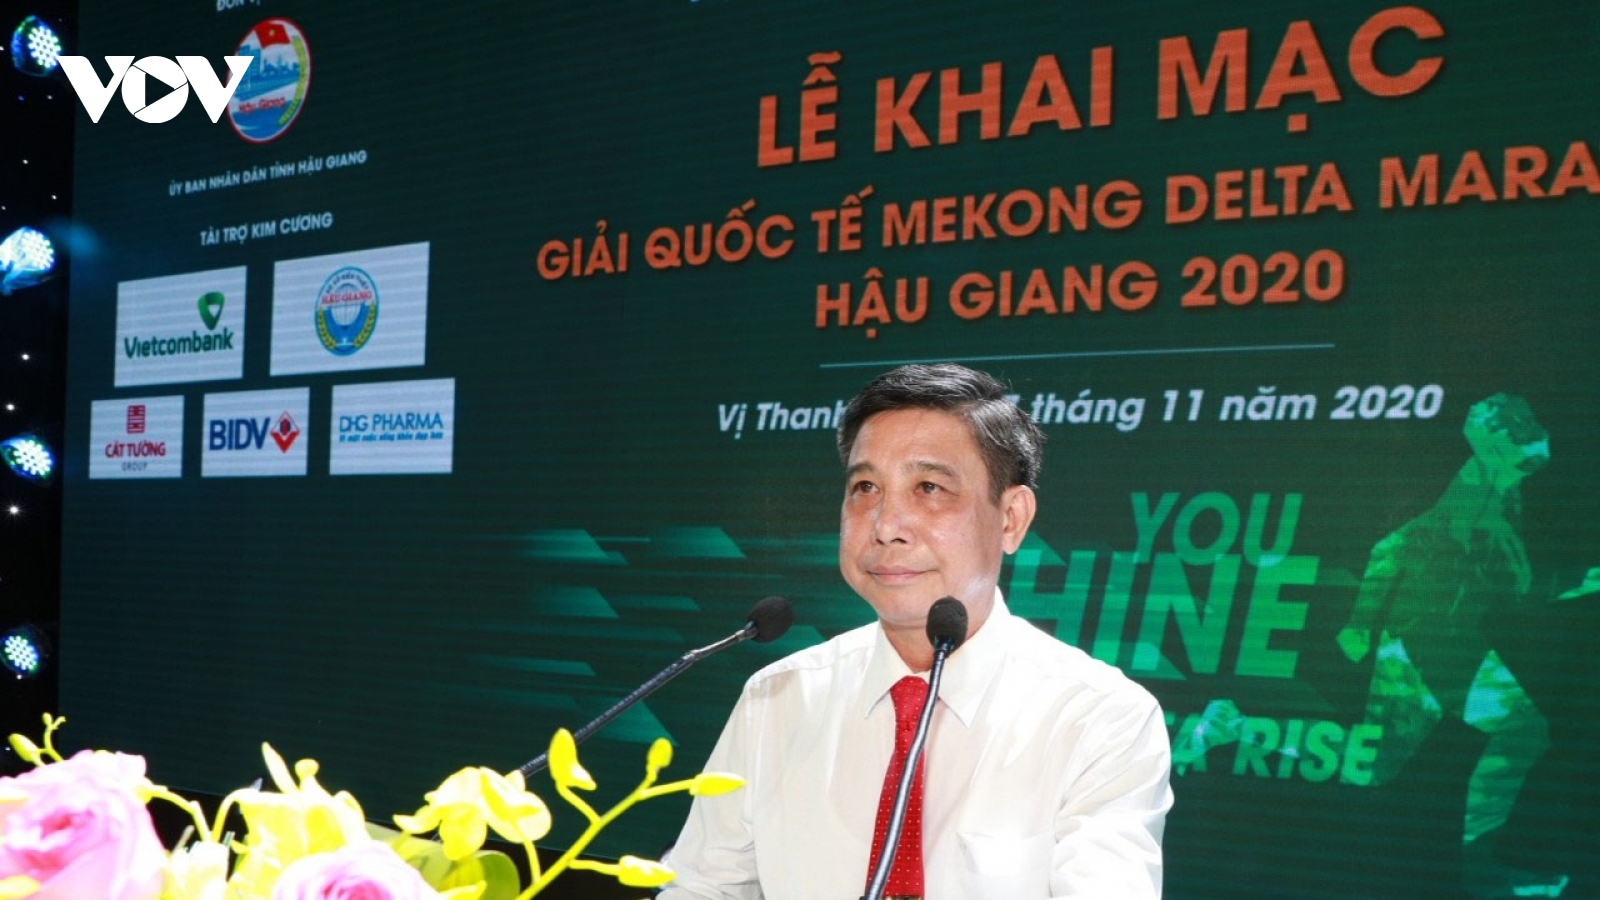 Khai mạc Giải Marathon quốc tế “Mekong Delta Marathon” Hậu Giang 2020